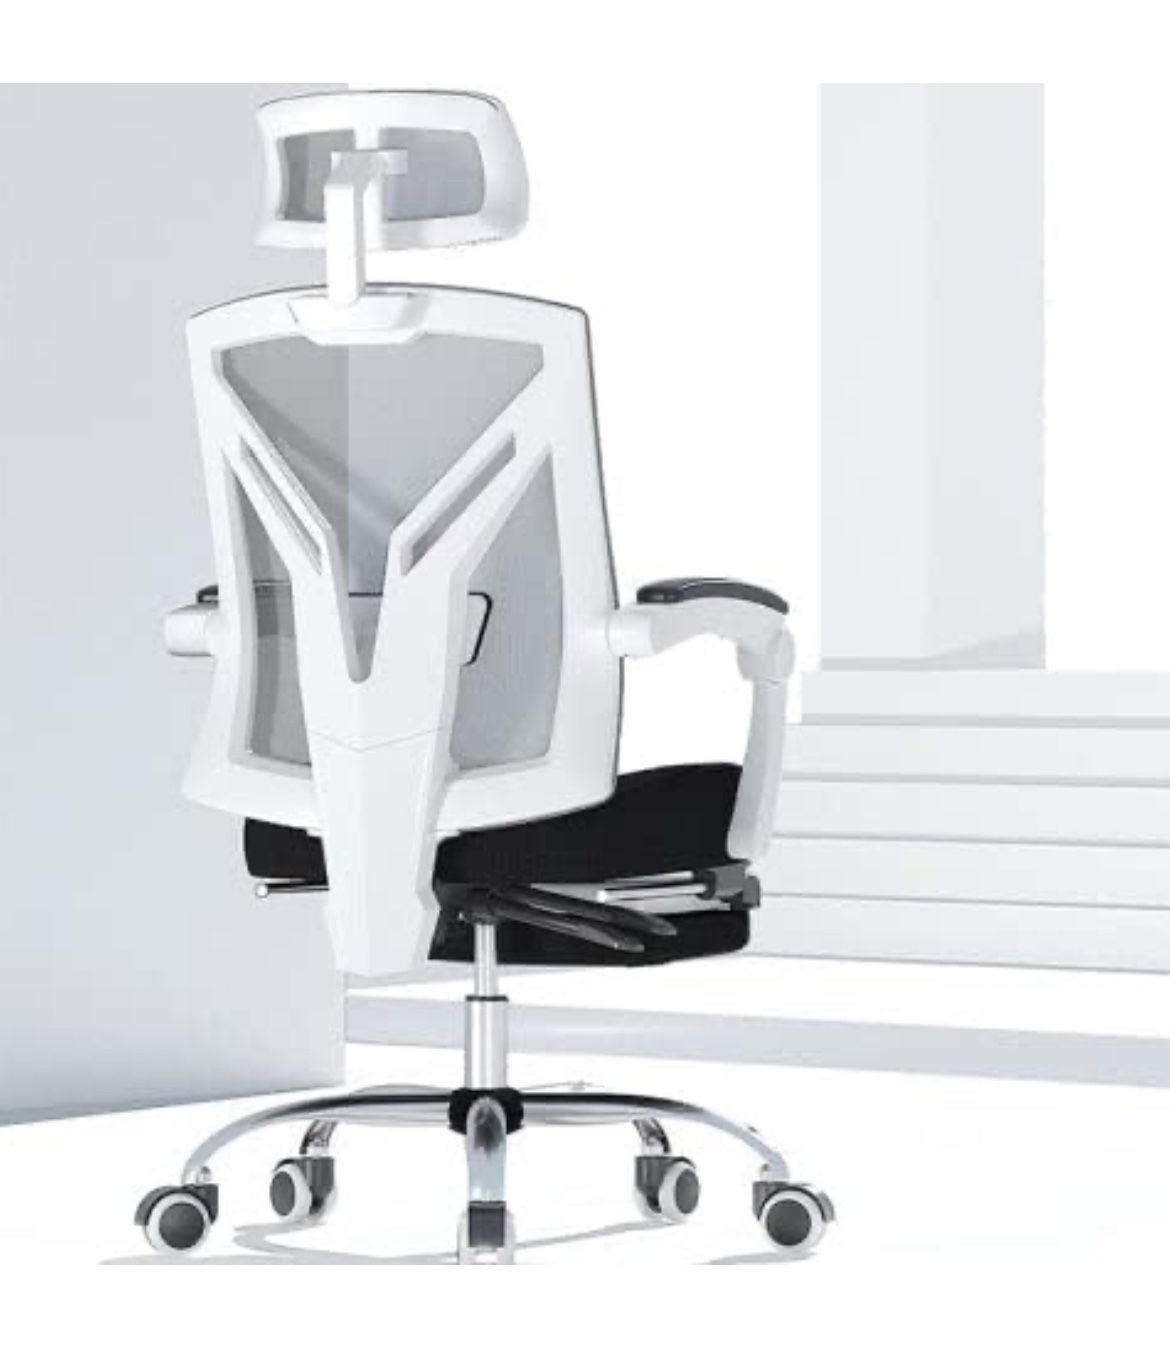 Ergonomic desk chair